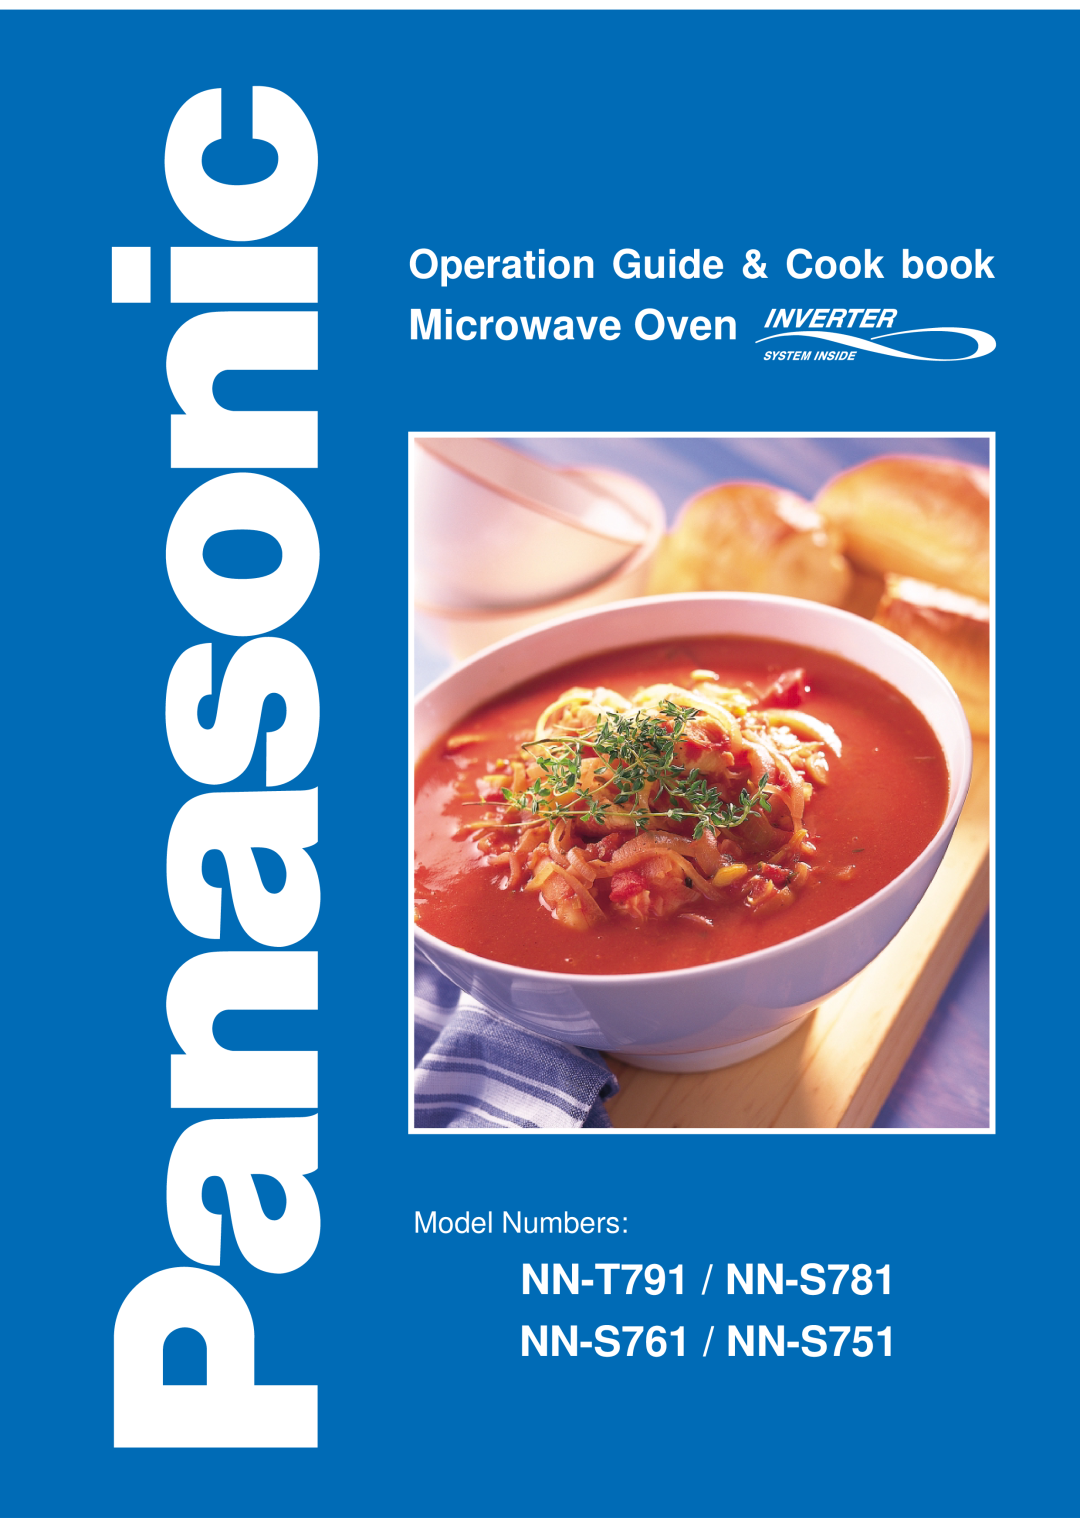 Panasonic manual Microwave Oven, NN-T791 / NN-S781 NN-S761 / NN-S751, Operation Guide & Cook book, Model Numbers 